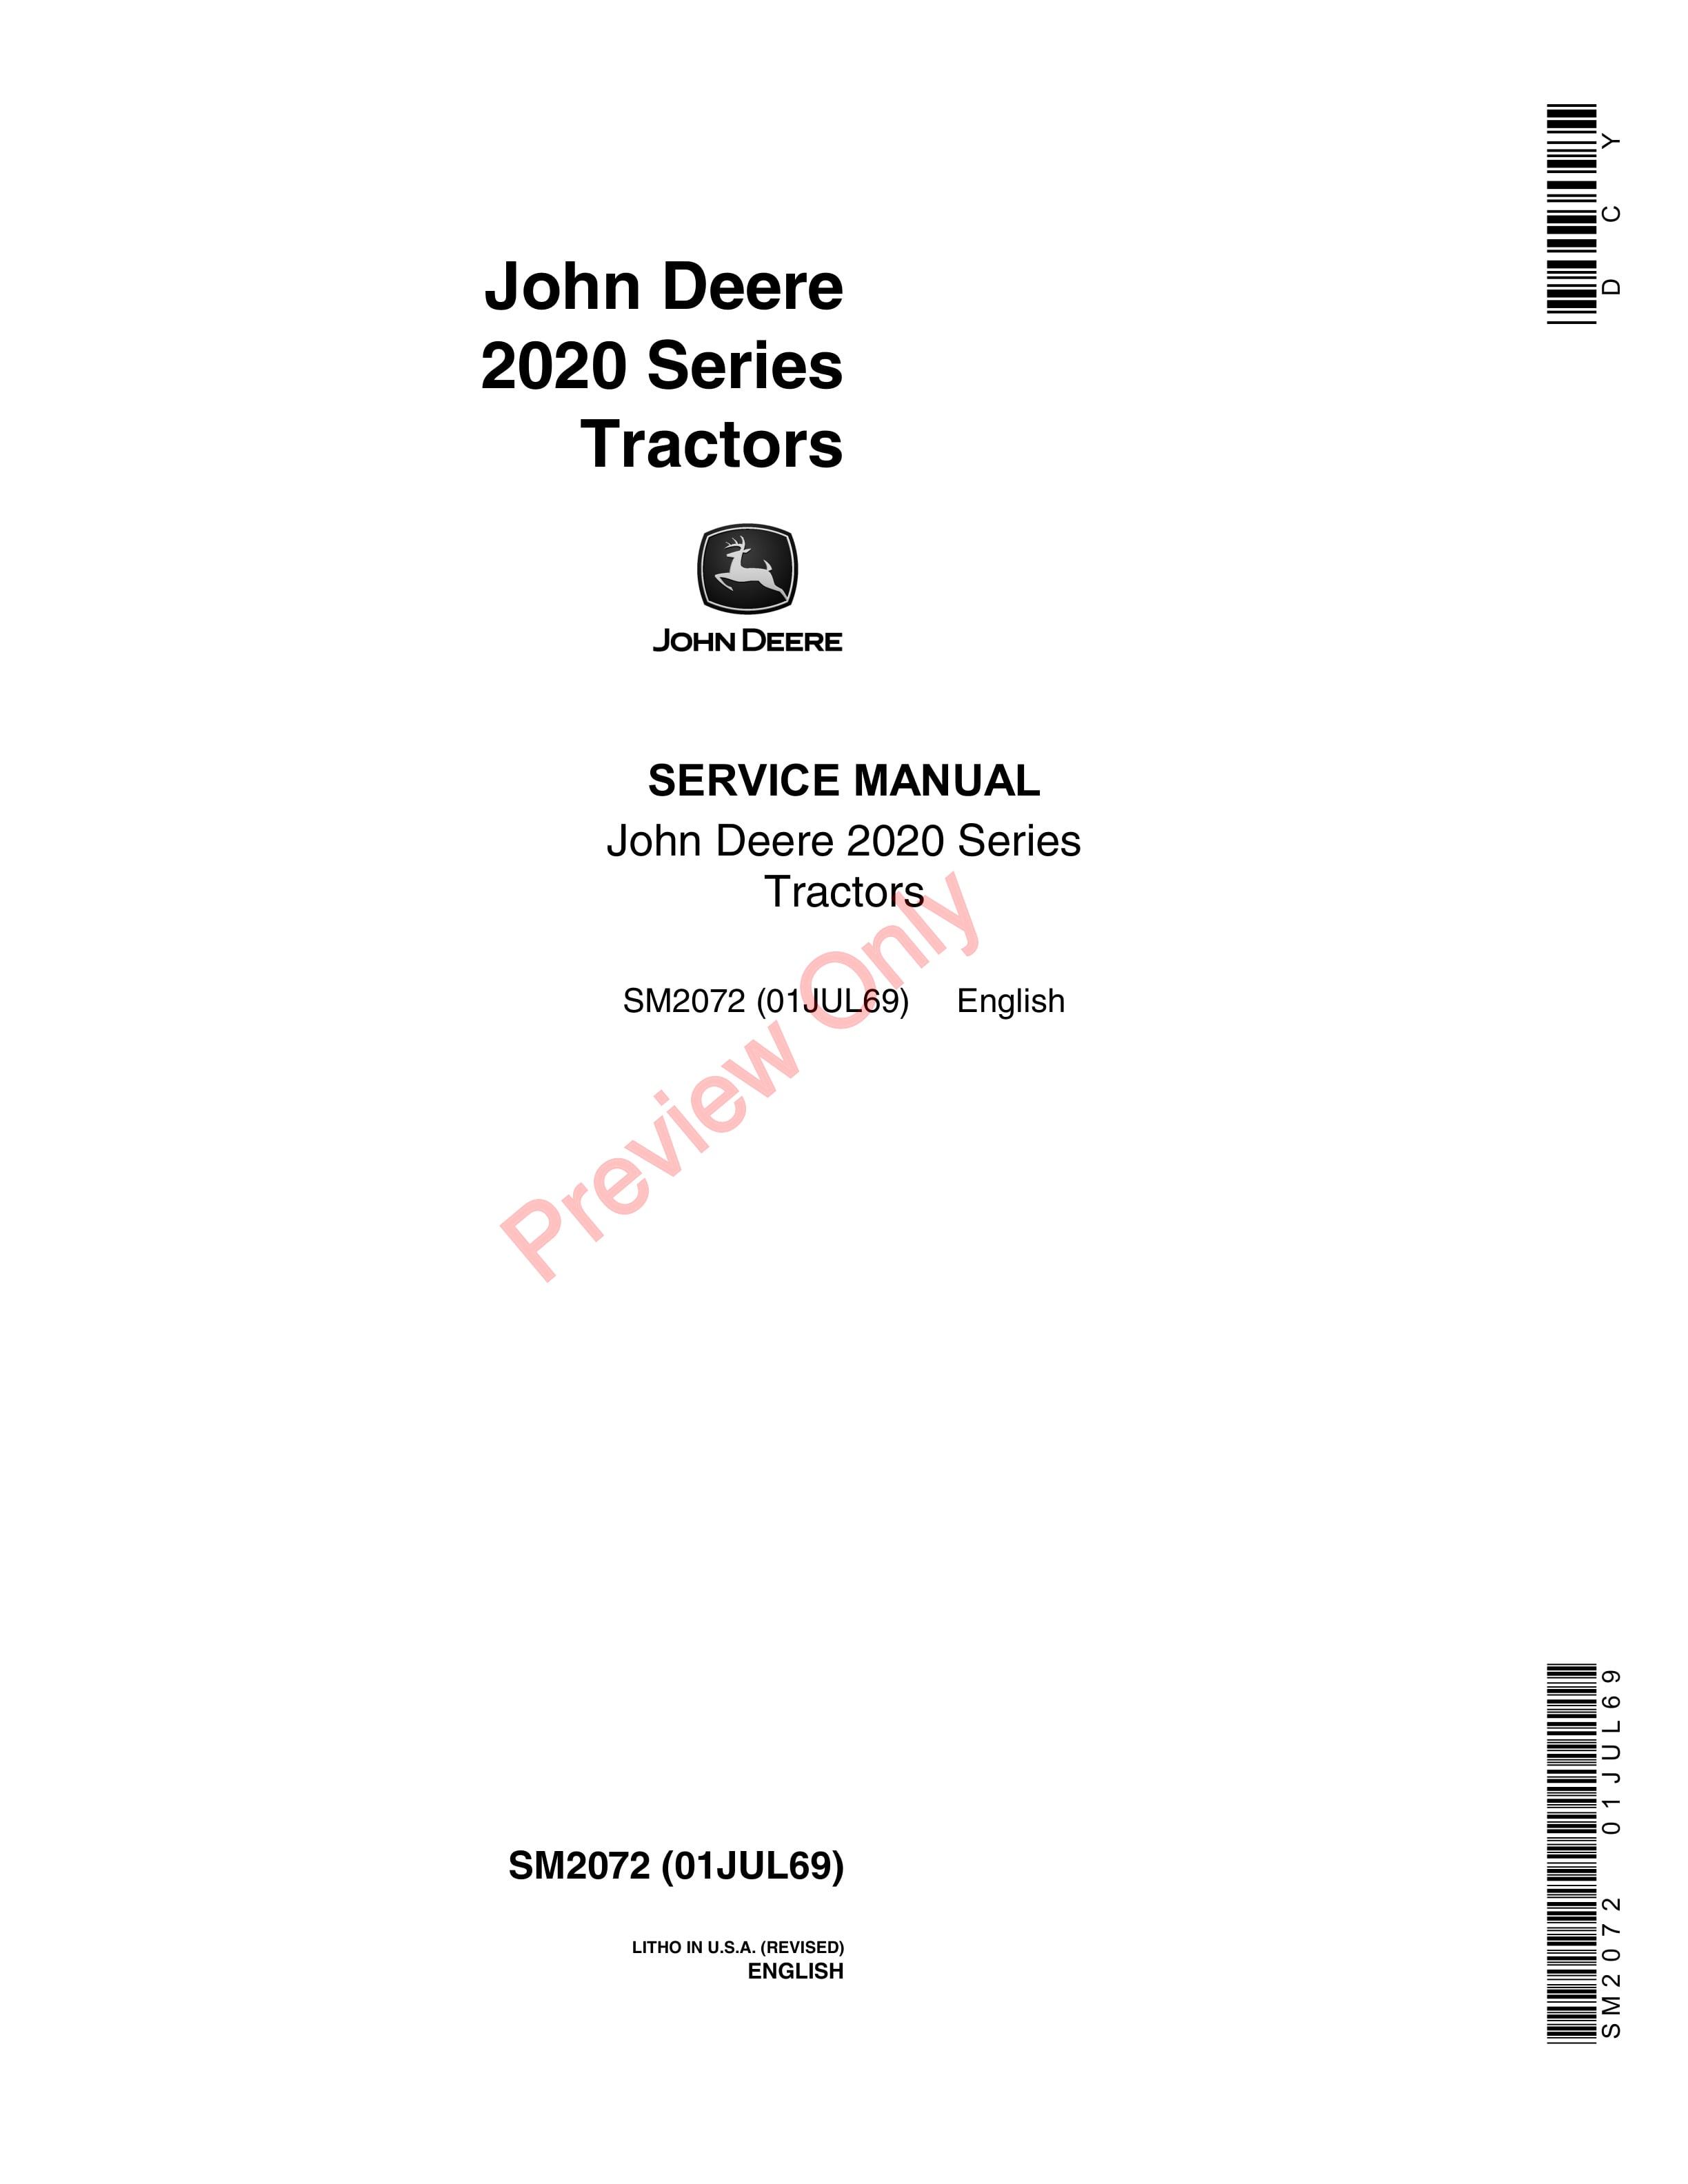 John Deere 2020 Series Tractors Service Manual SM2072 01JUL69-1